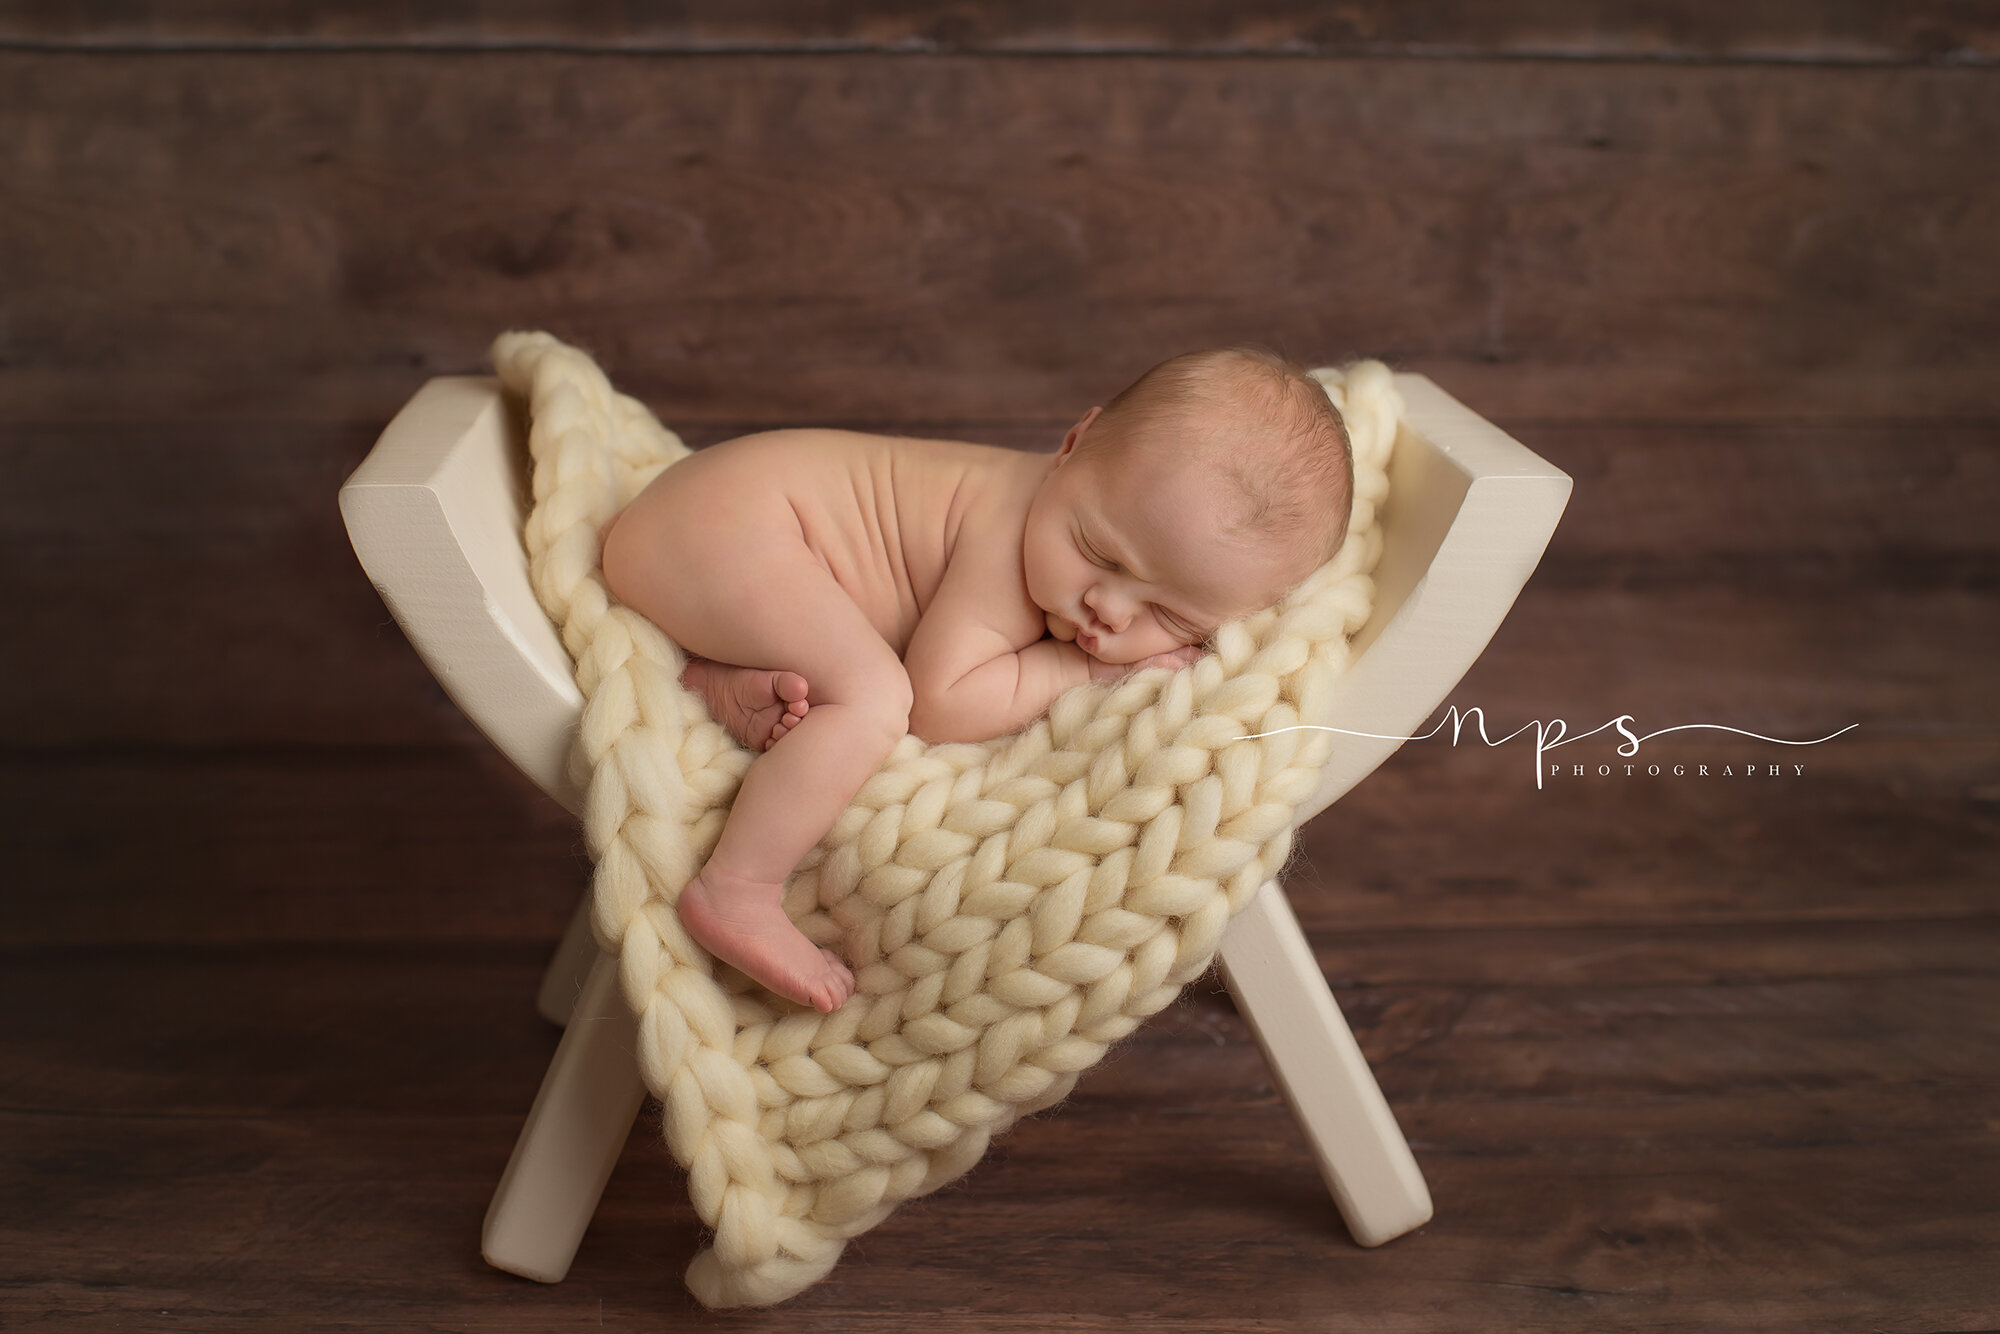 NPS-Photography-Raeford Newborn Photographer-Baby-F-006